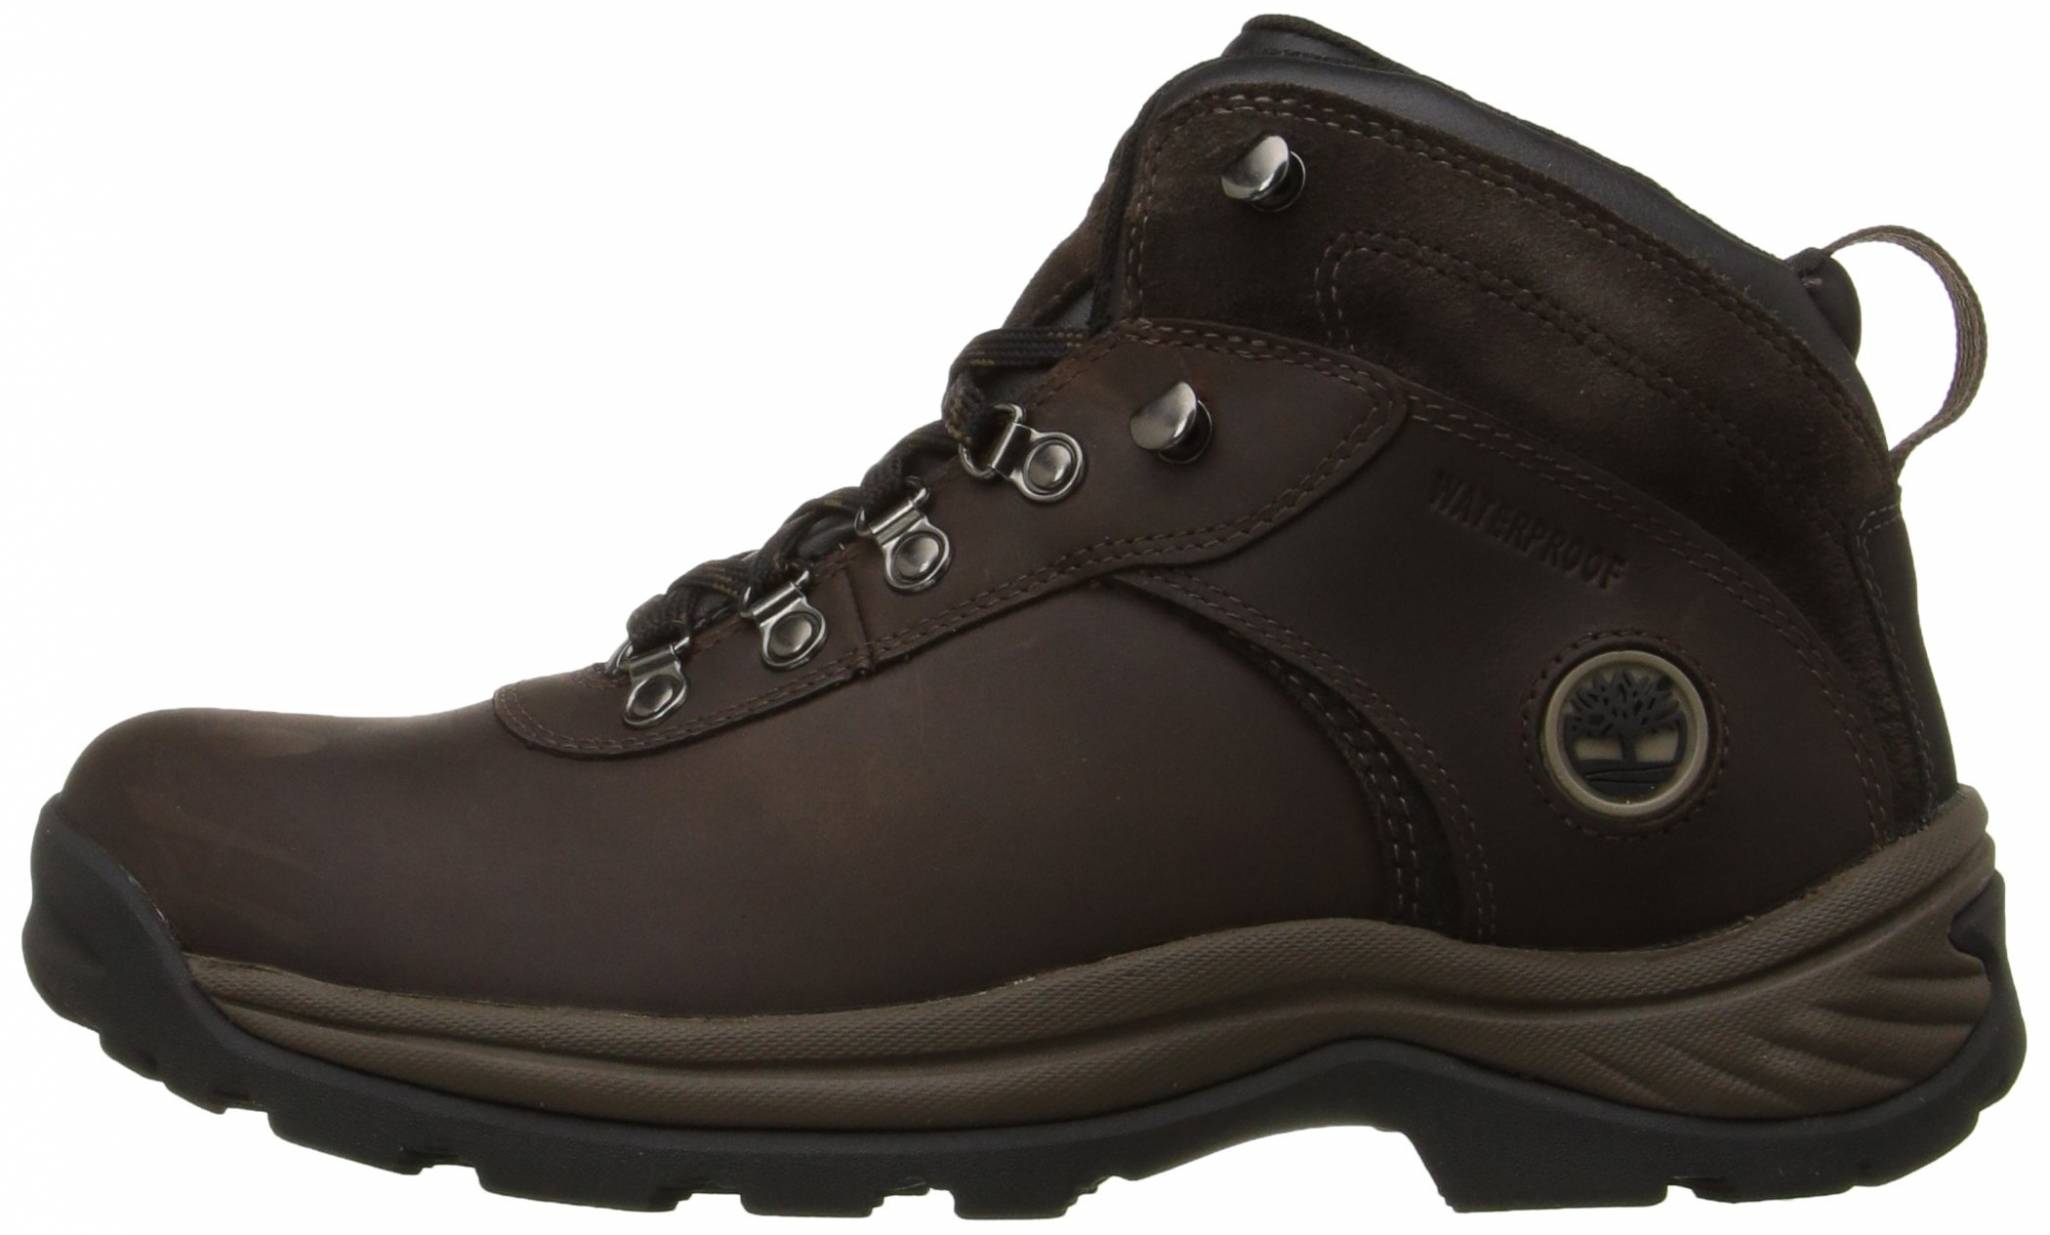 Save 25% on Timberland Hiking Boots (14 